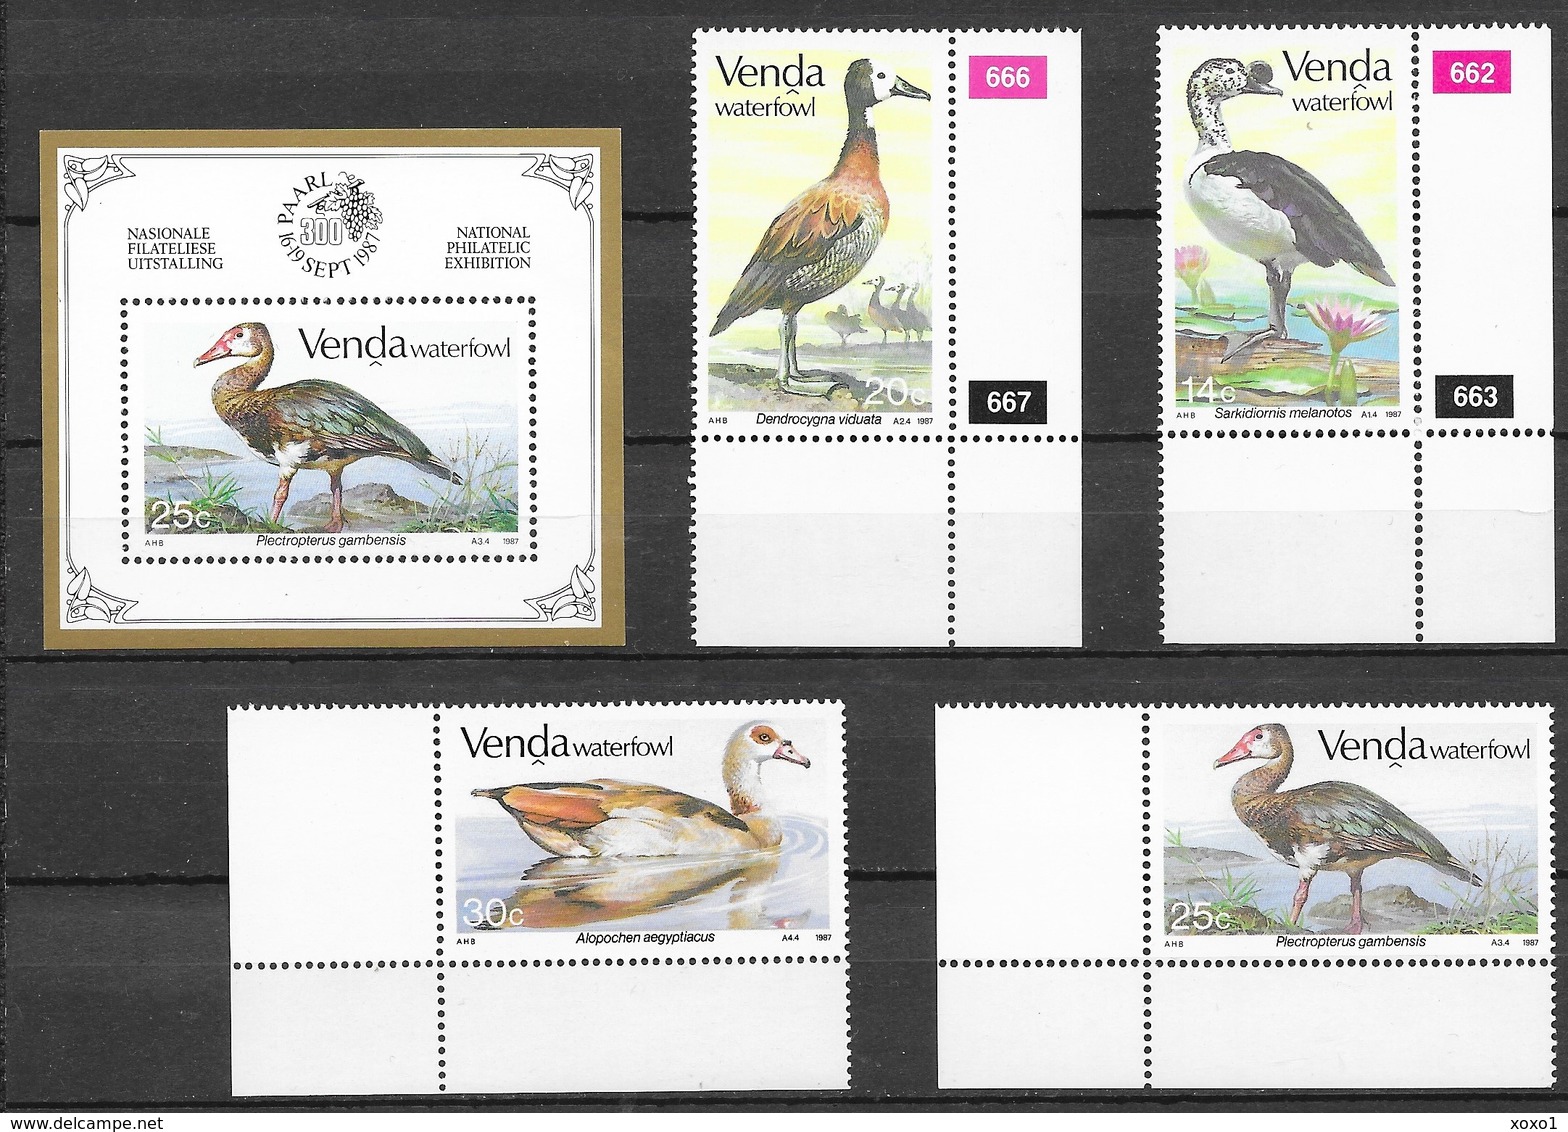 Venda South Africa 1987 MiNr. 150 - 153 (Block 3) Birds Geese 4v+1bl MNH**  15.50 € - Gansos